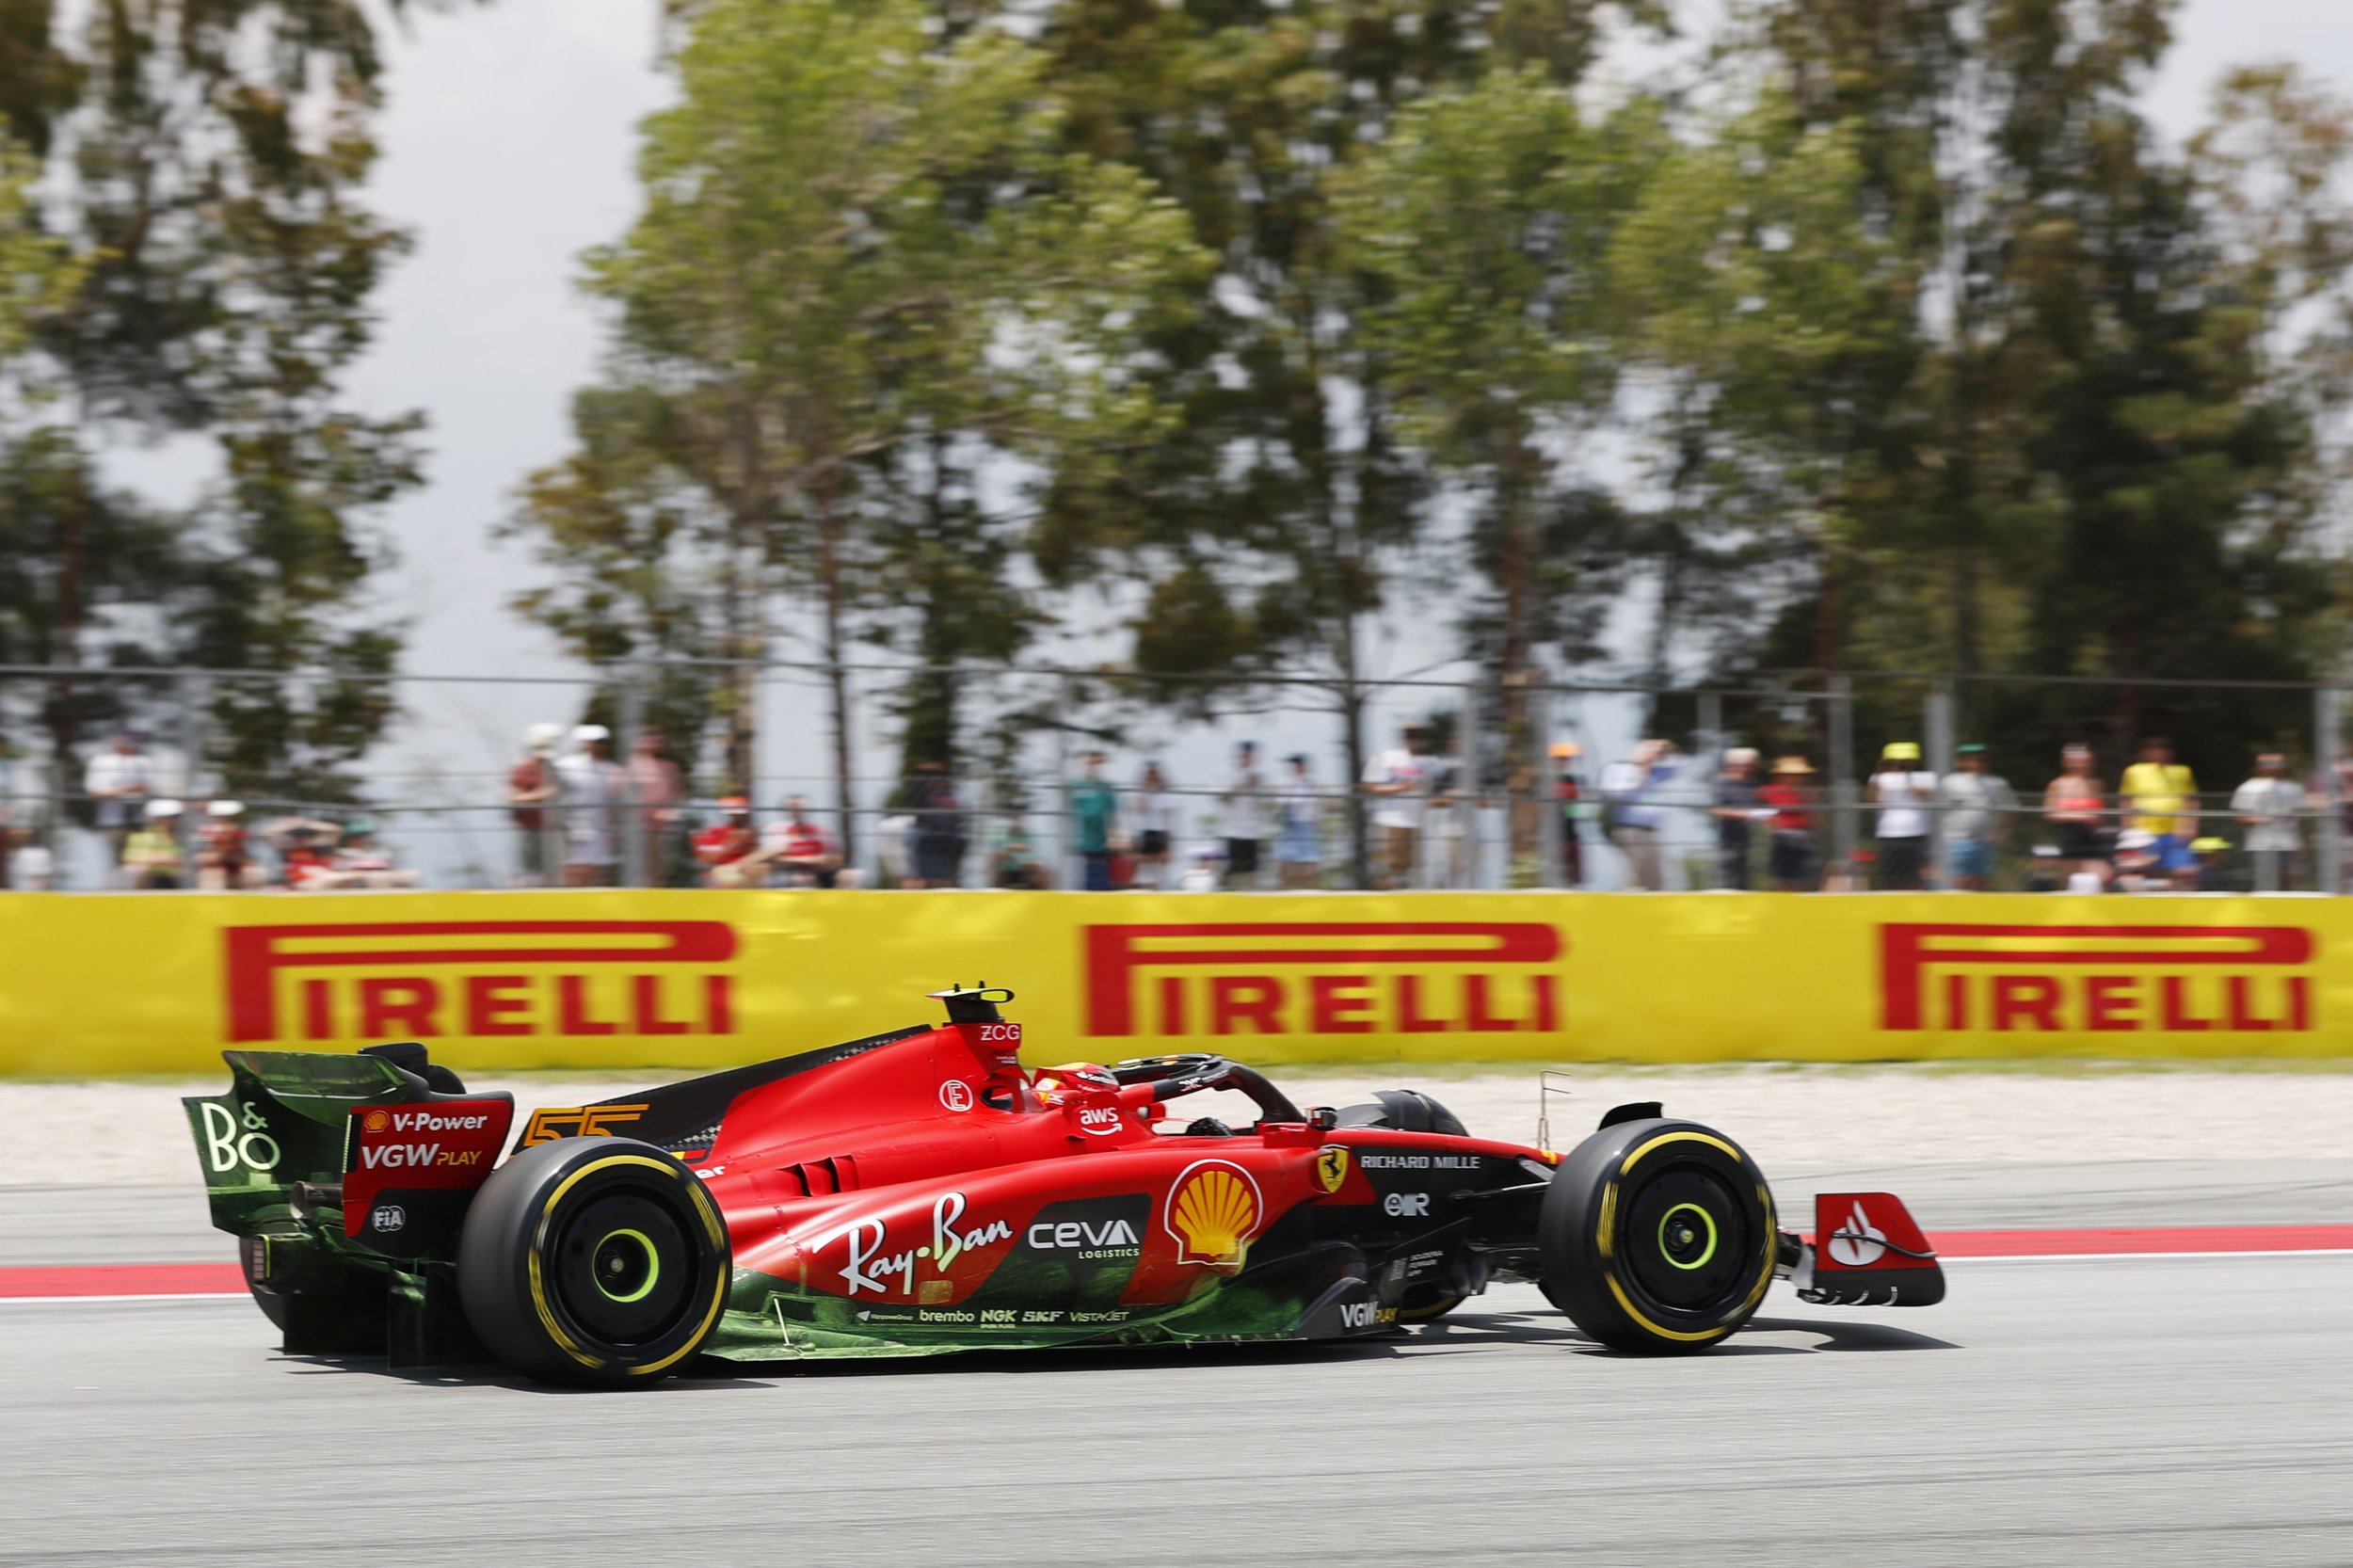 Ferrari unveils new sidepod design at F1 Spanish Grand Prix